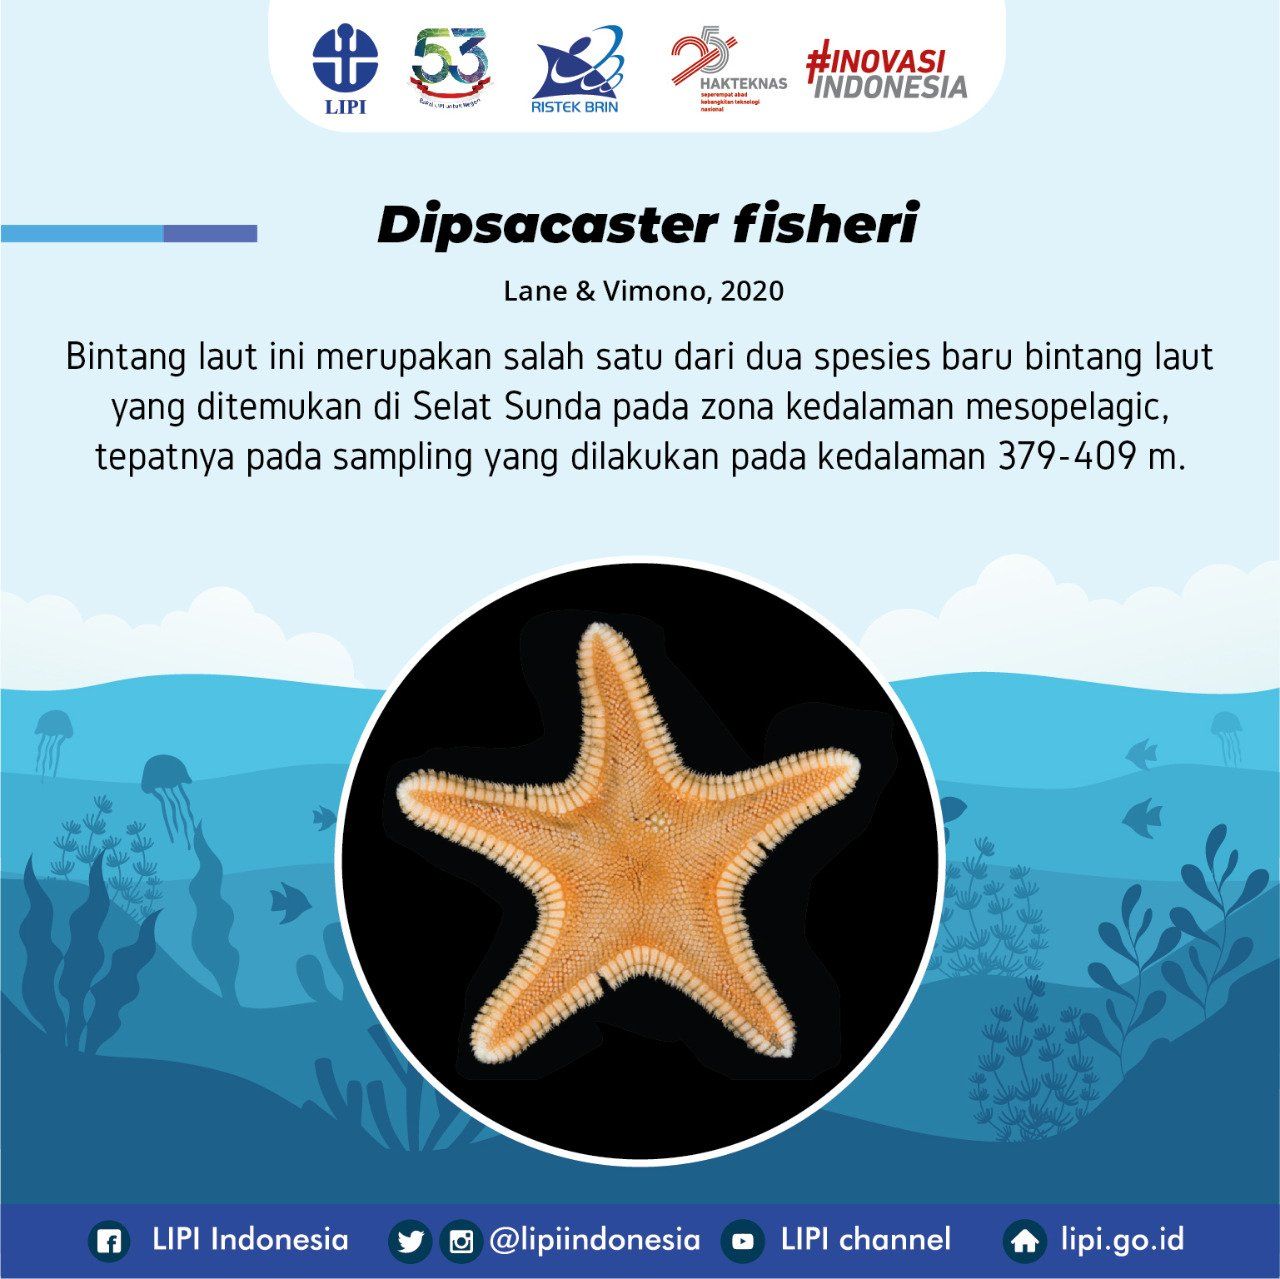 Dipsacaster fisheri